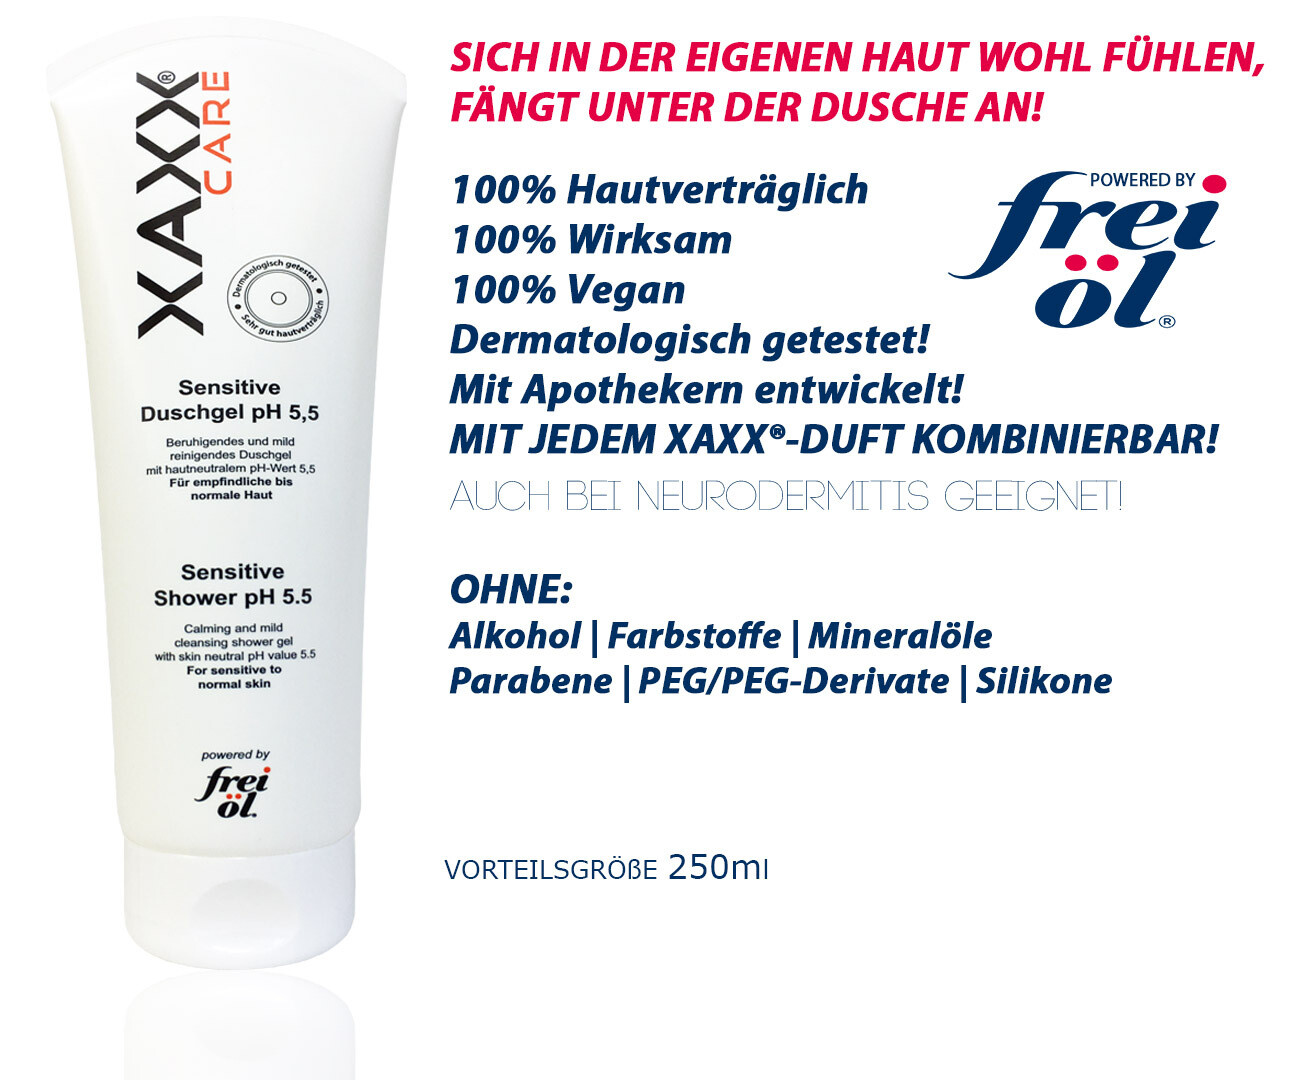 Xaxx Care powered by Frei Öl Sensitive Duschgel Showergel pH 5,5 250ml